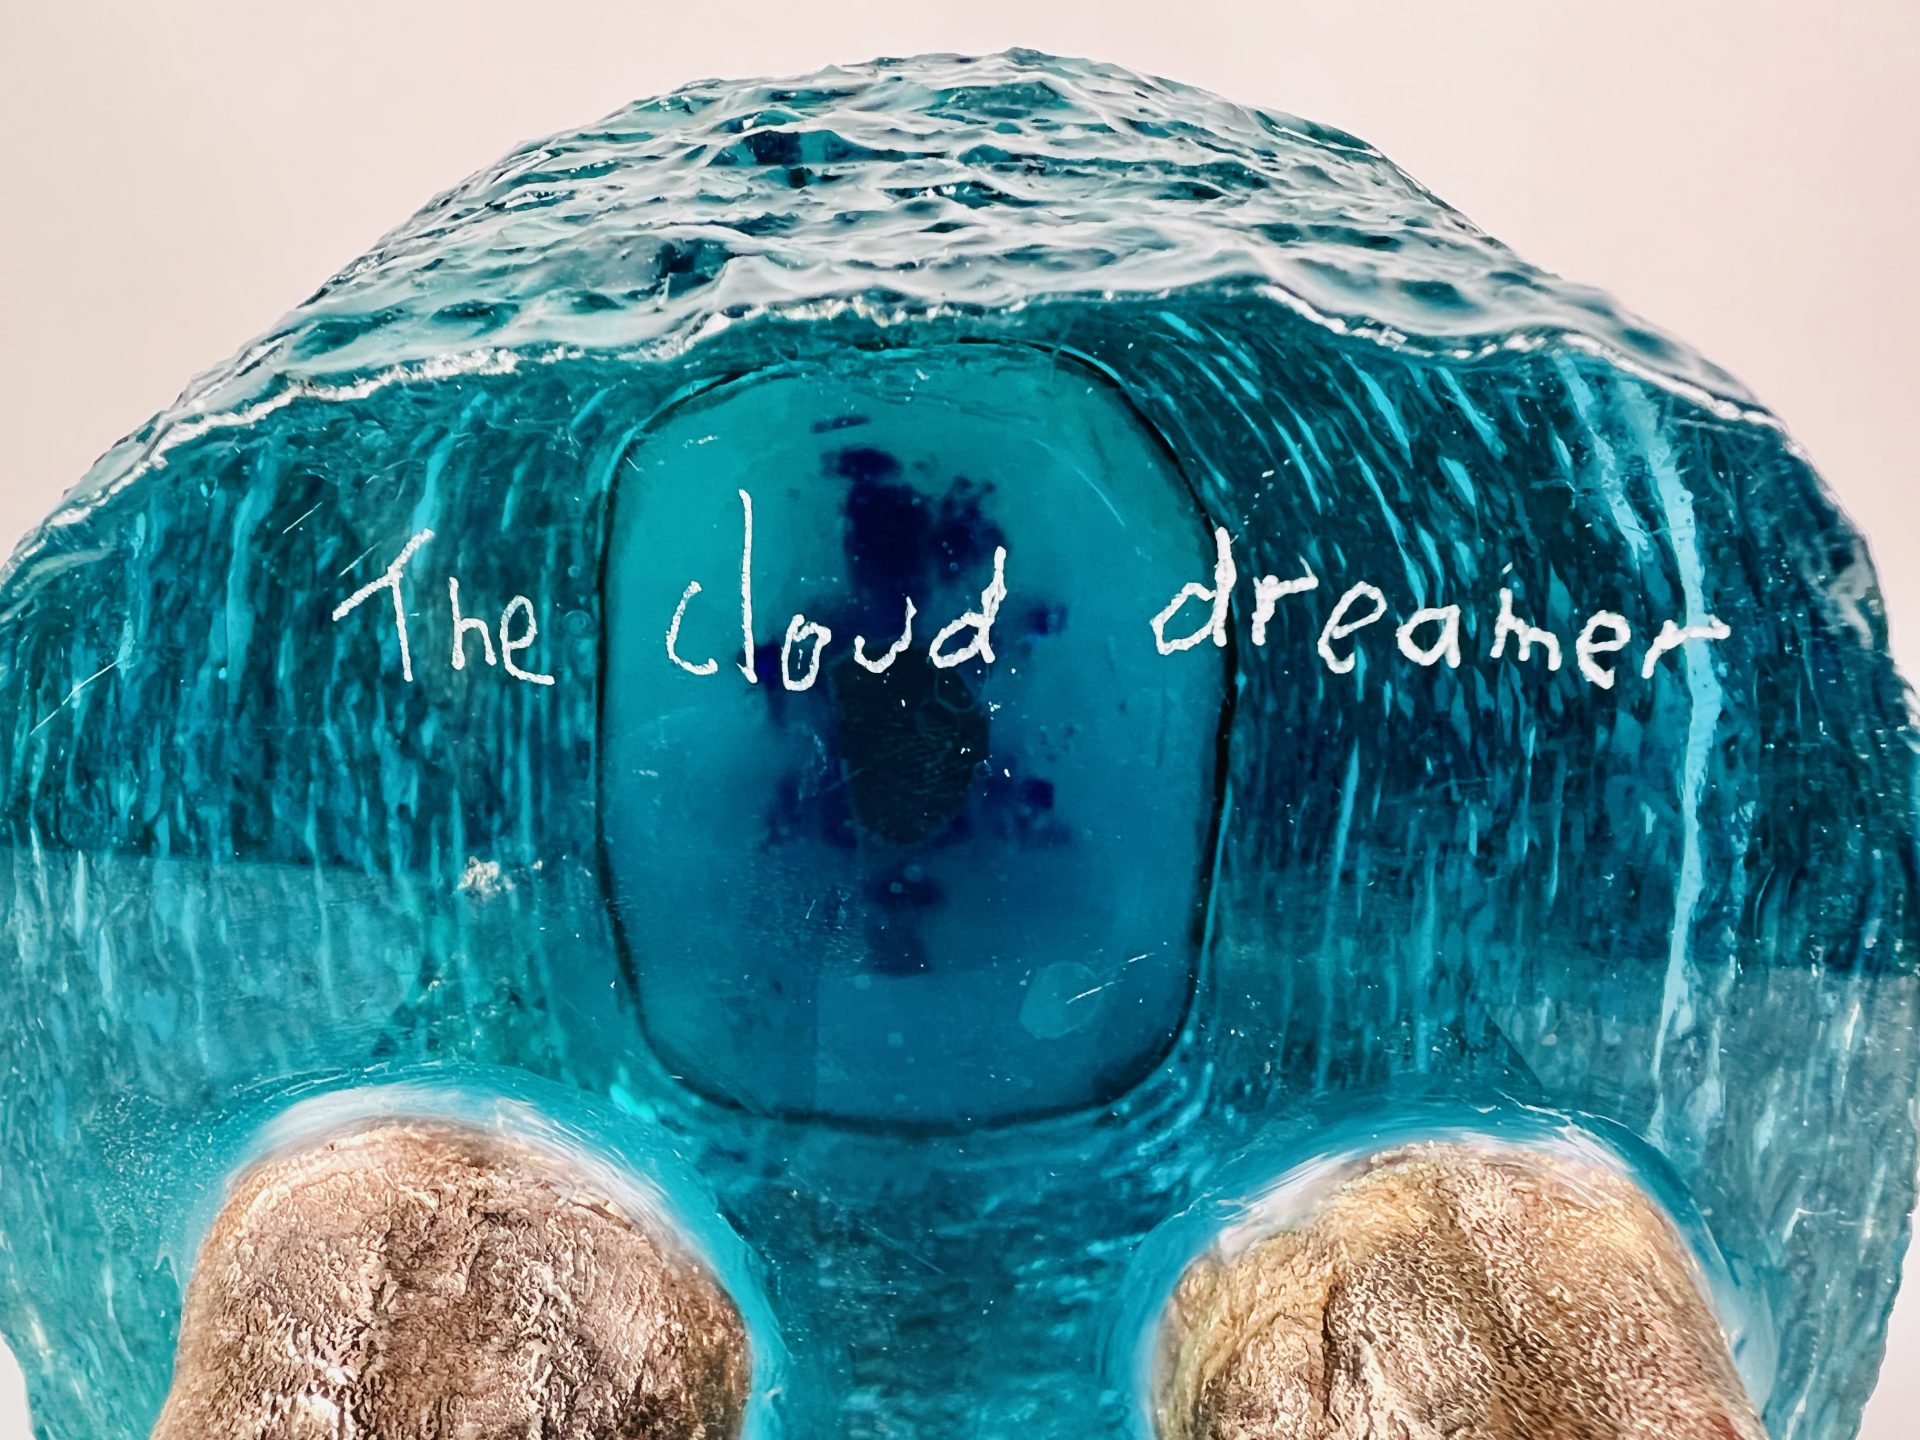 The cloud dreamer 48x18x25 cm Gegoten glas, glas, brons SJAAK SMETSERS FOTO 2